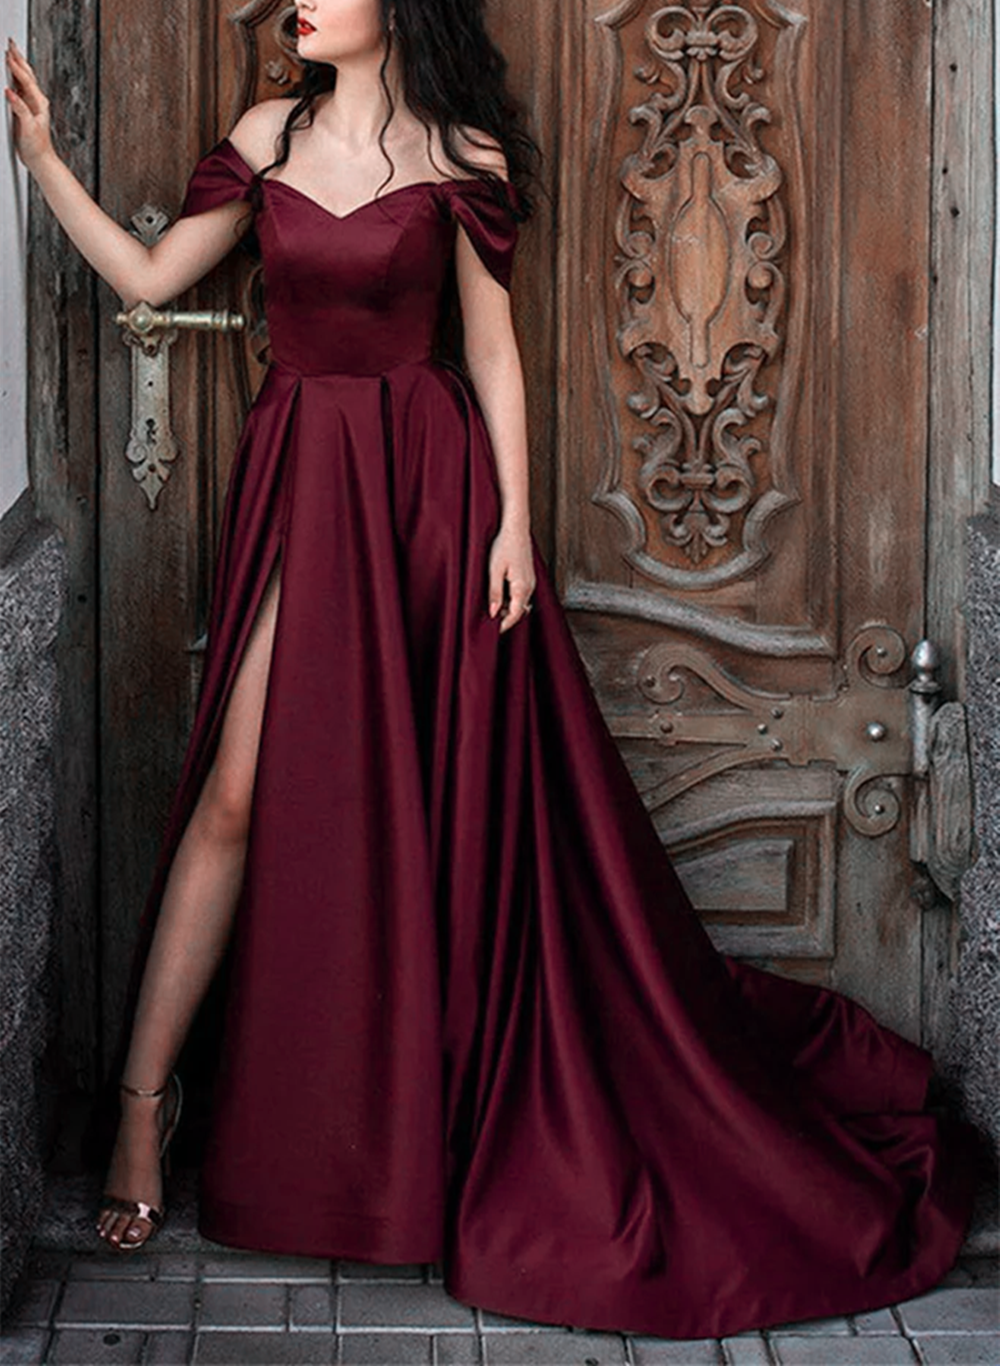 red wine dress